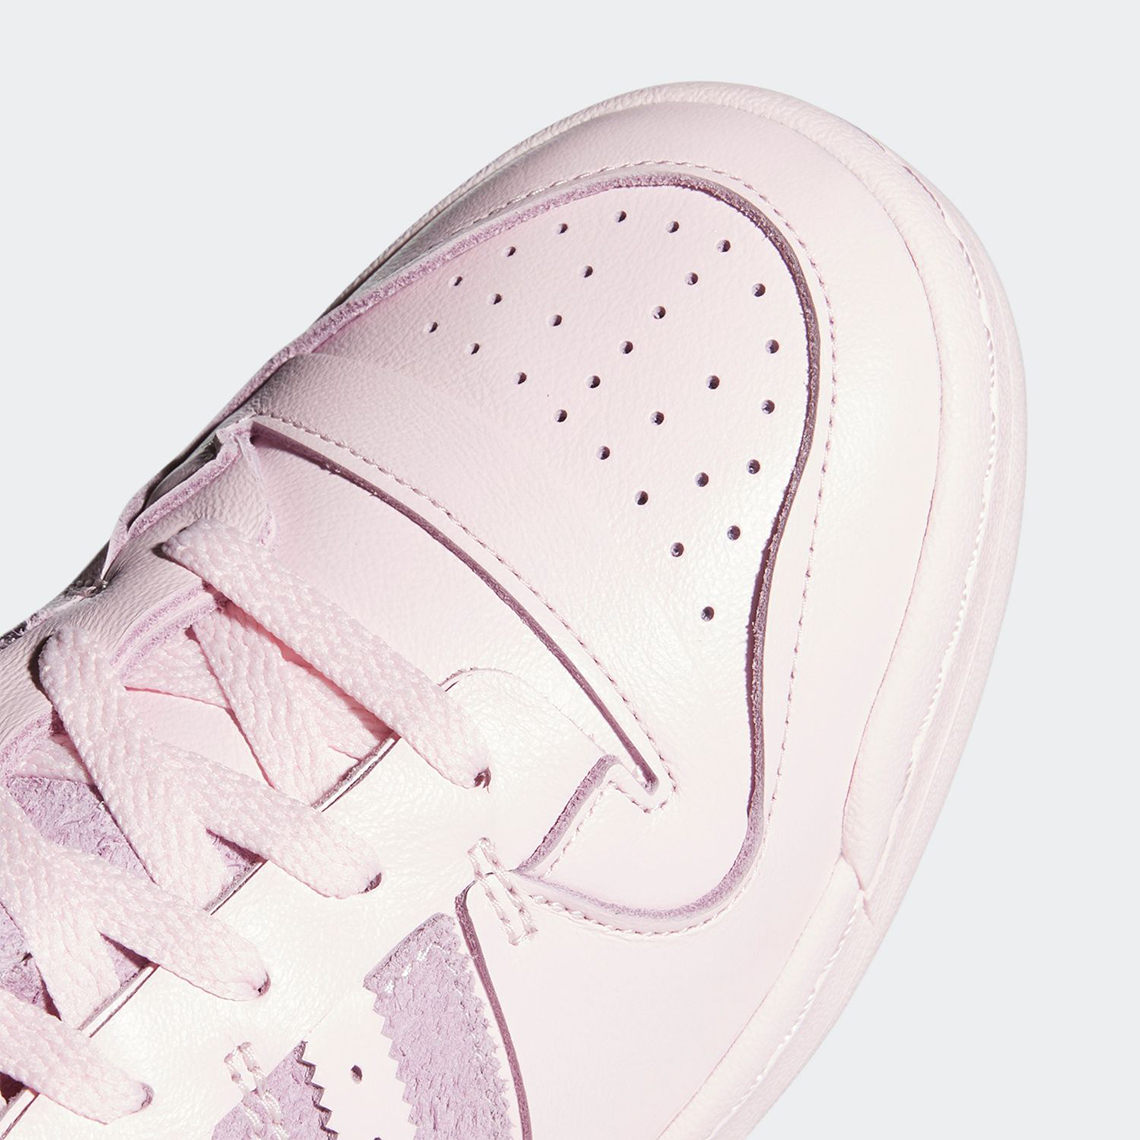 Adidas Forum Low Minimalist Fy8277 Clear Pink 1